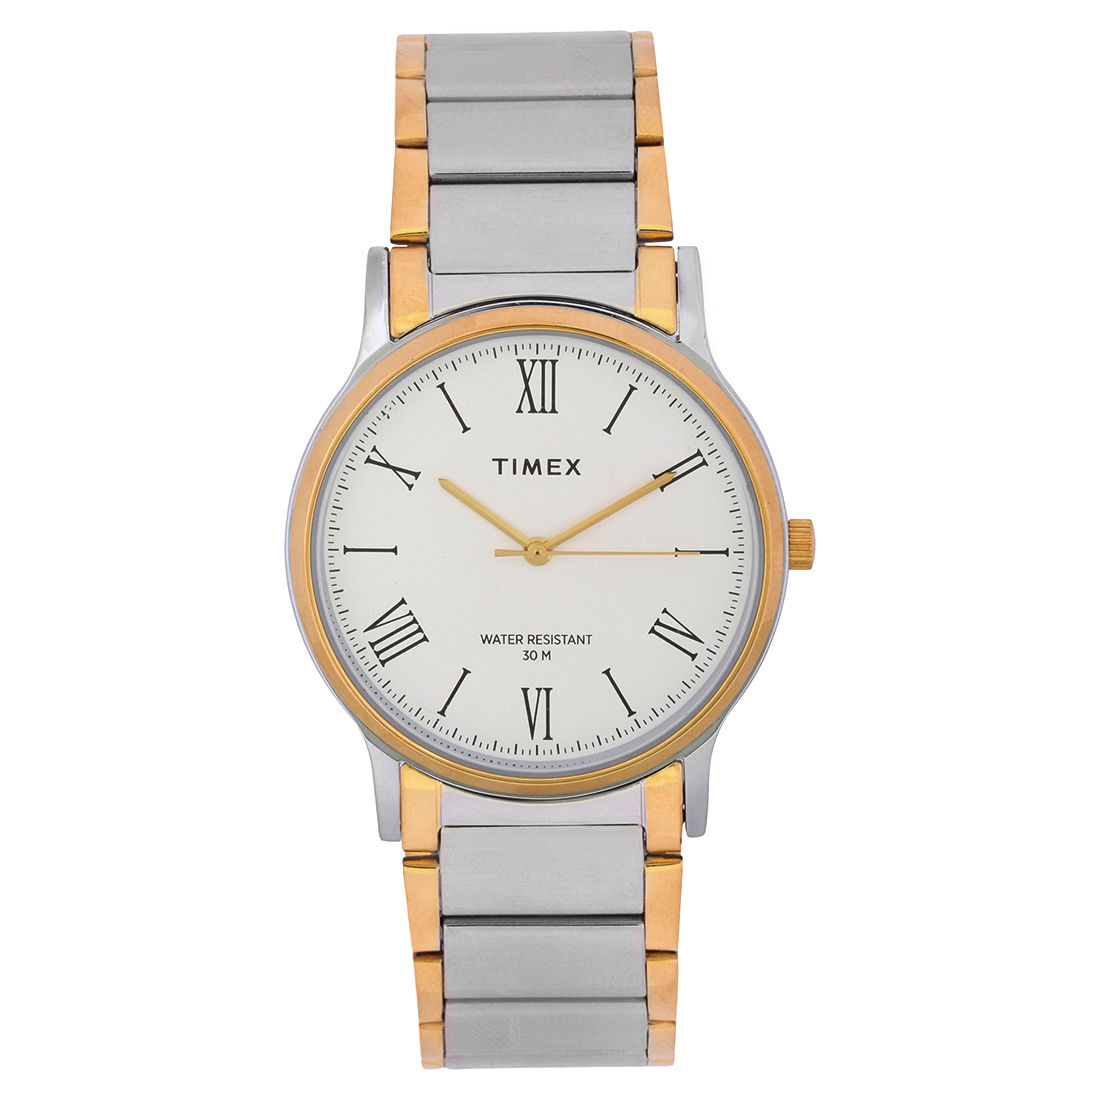 Timex Analog White Dial Men's Watch (TW000R432)